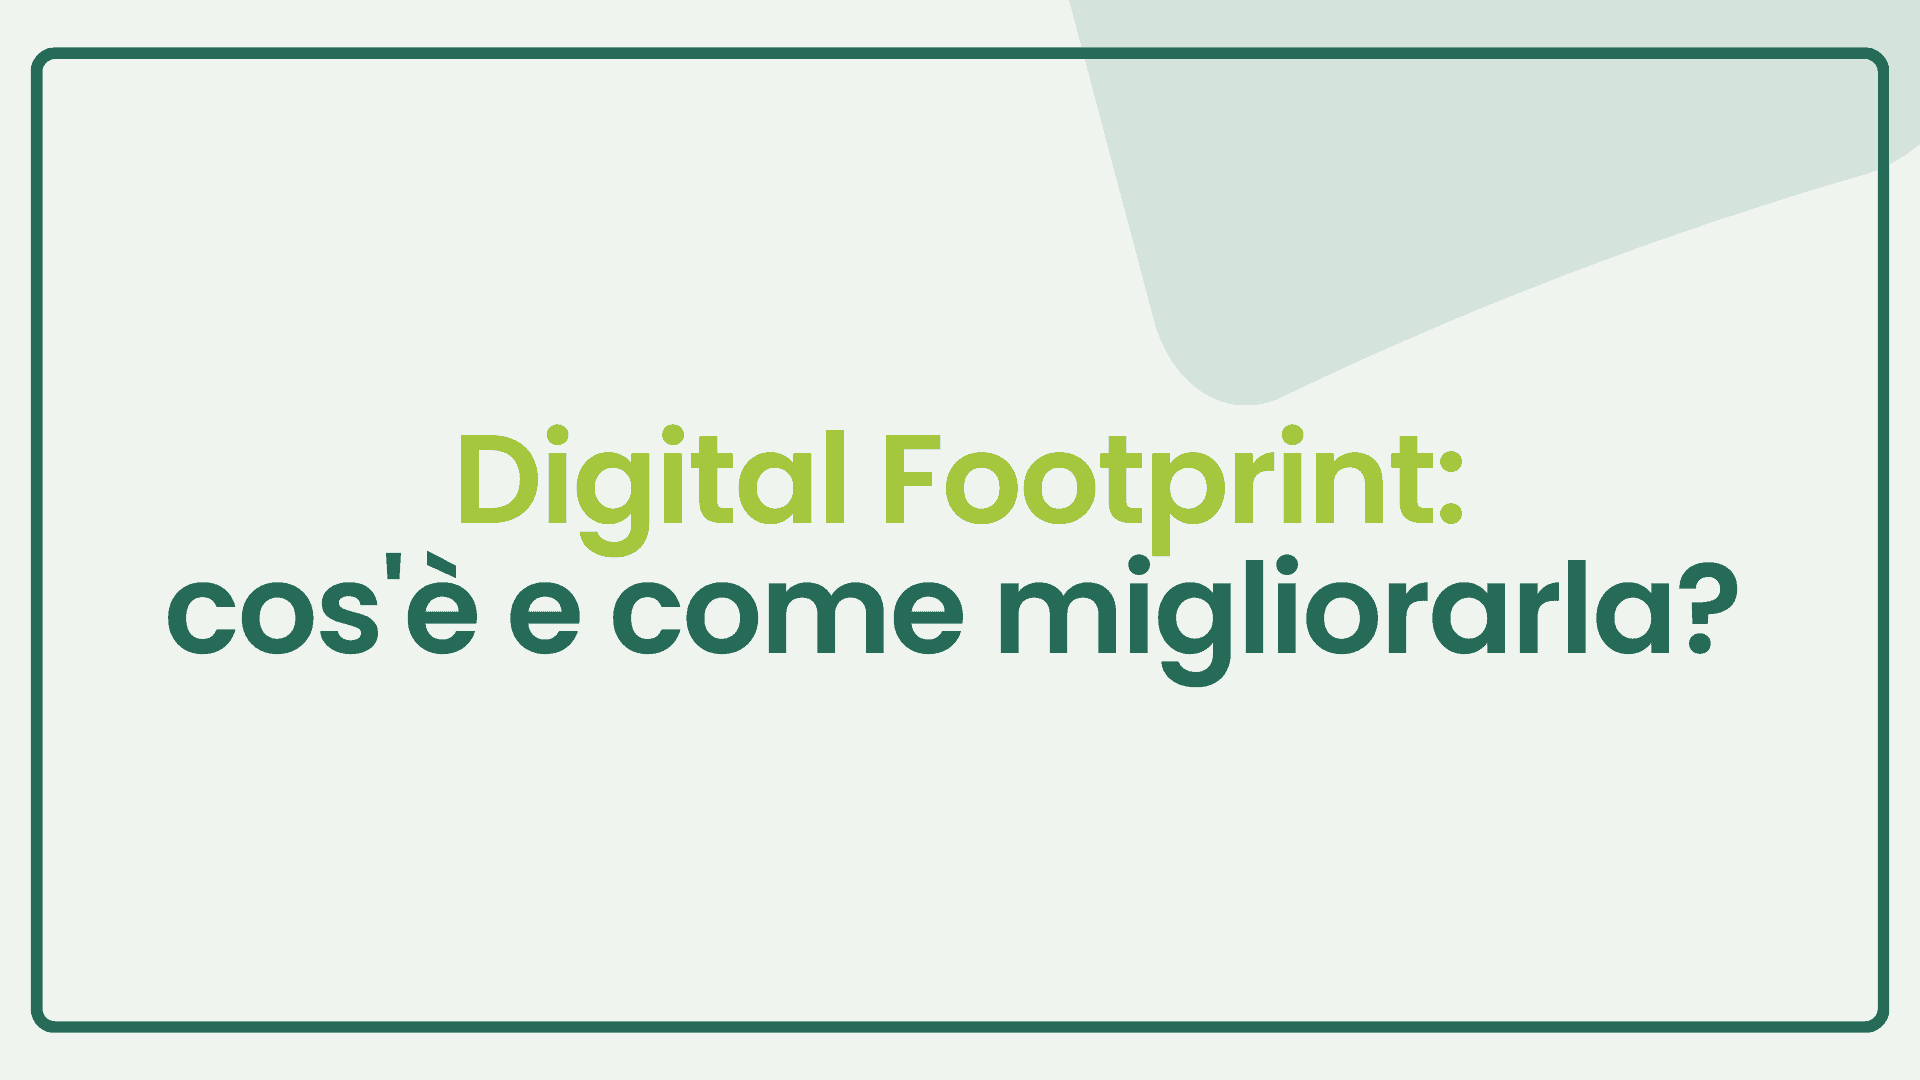 Digital footprint: cos'è e come migliorarla?